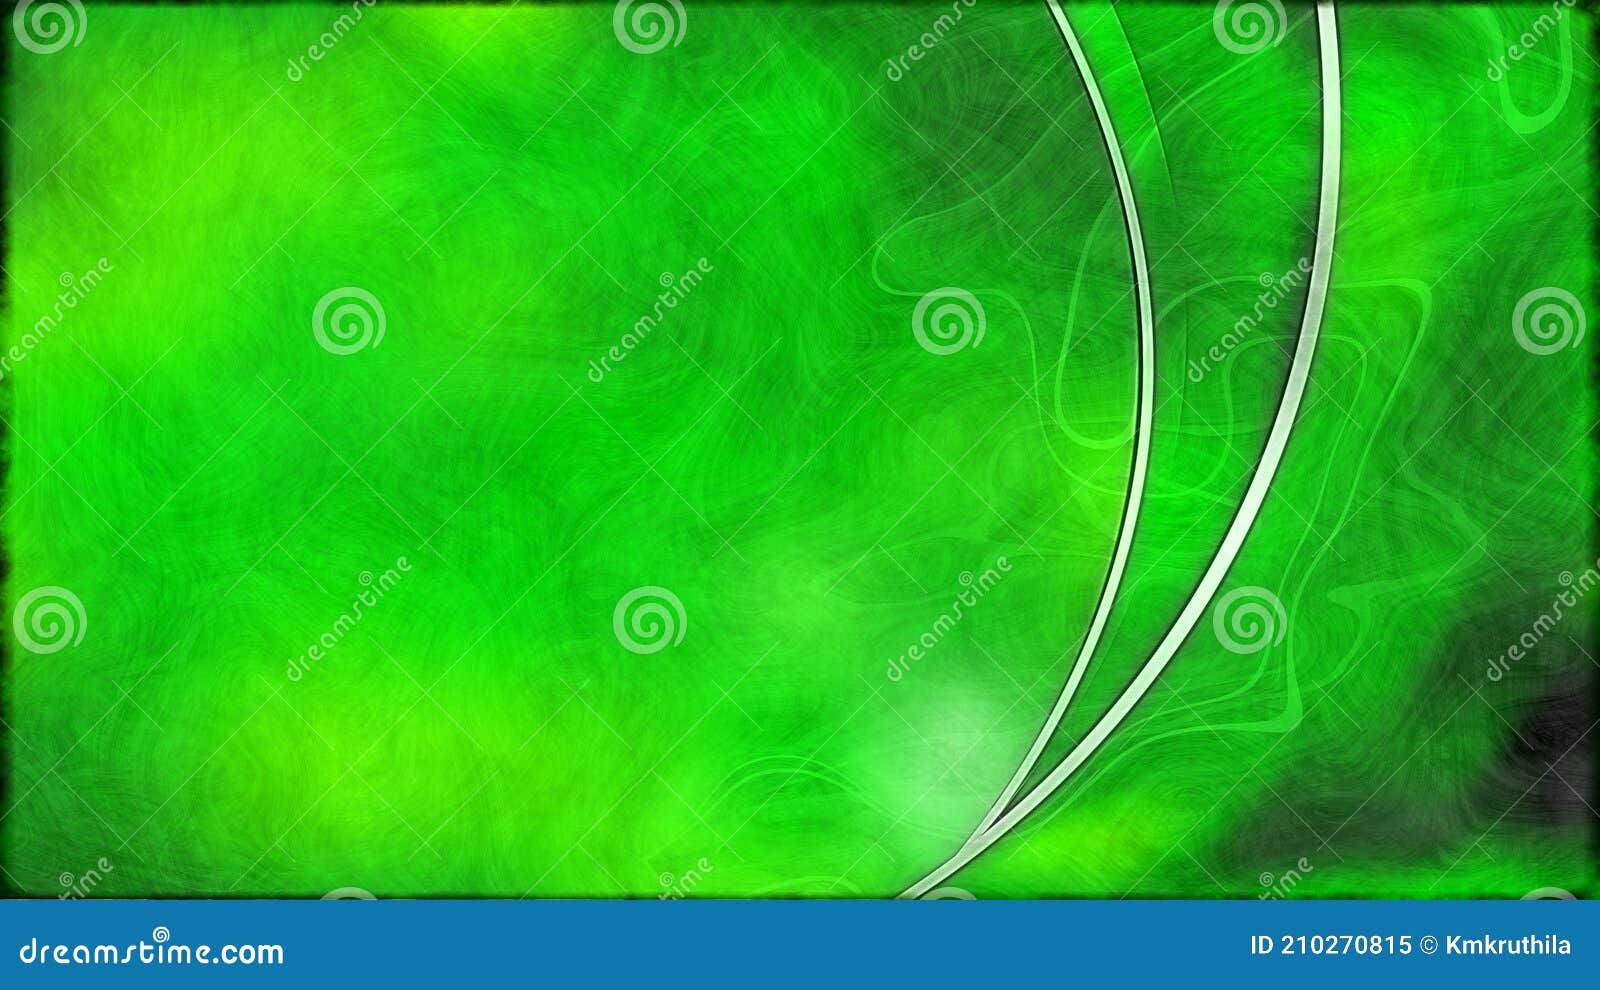 abstract neon green wallpaper